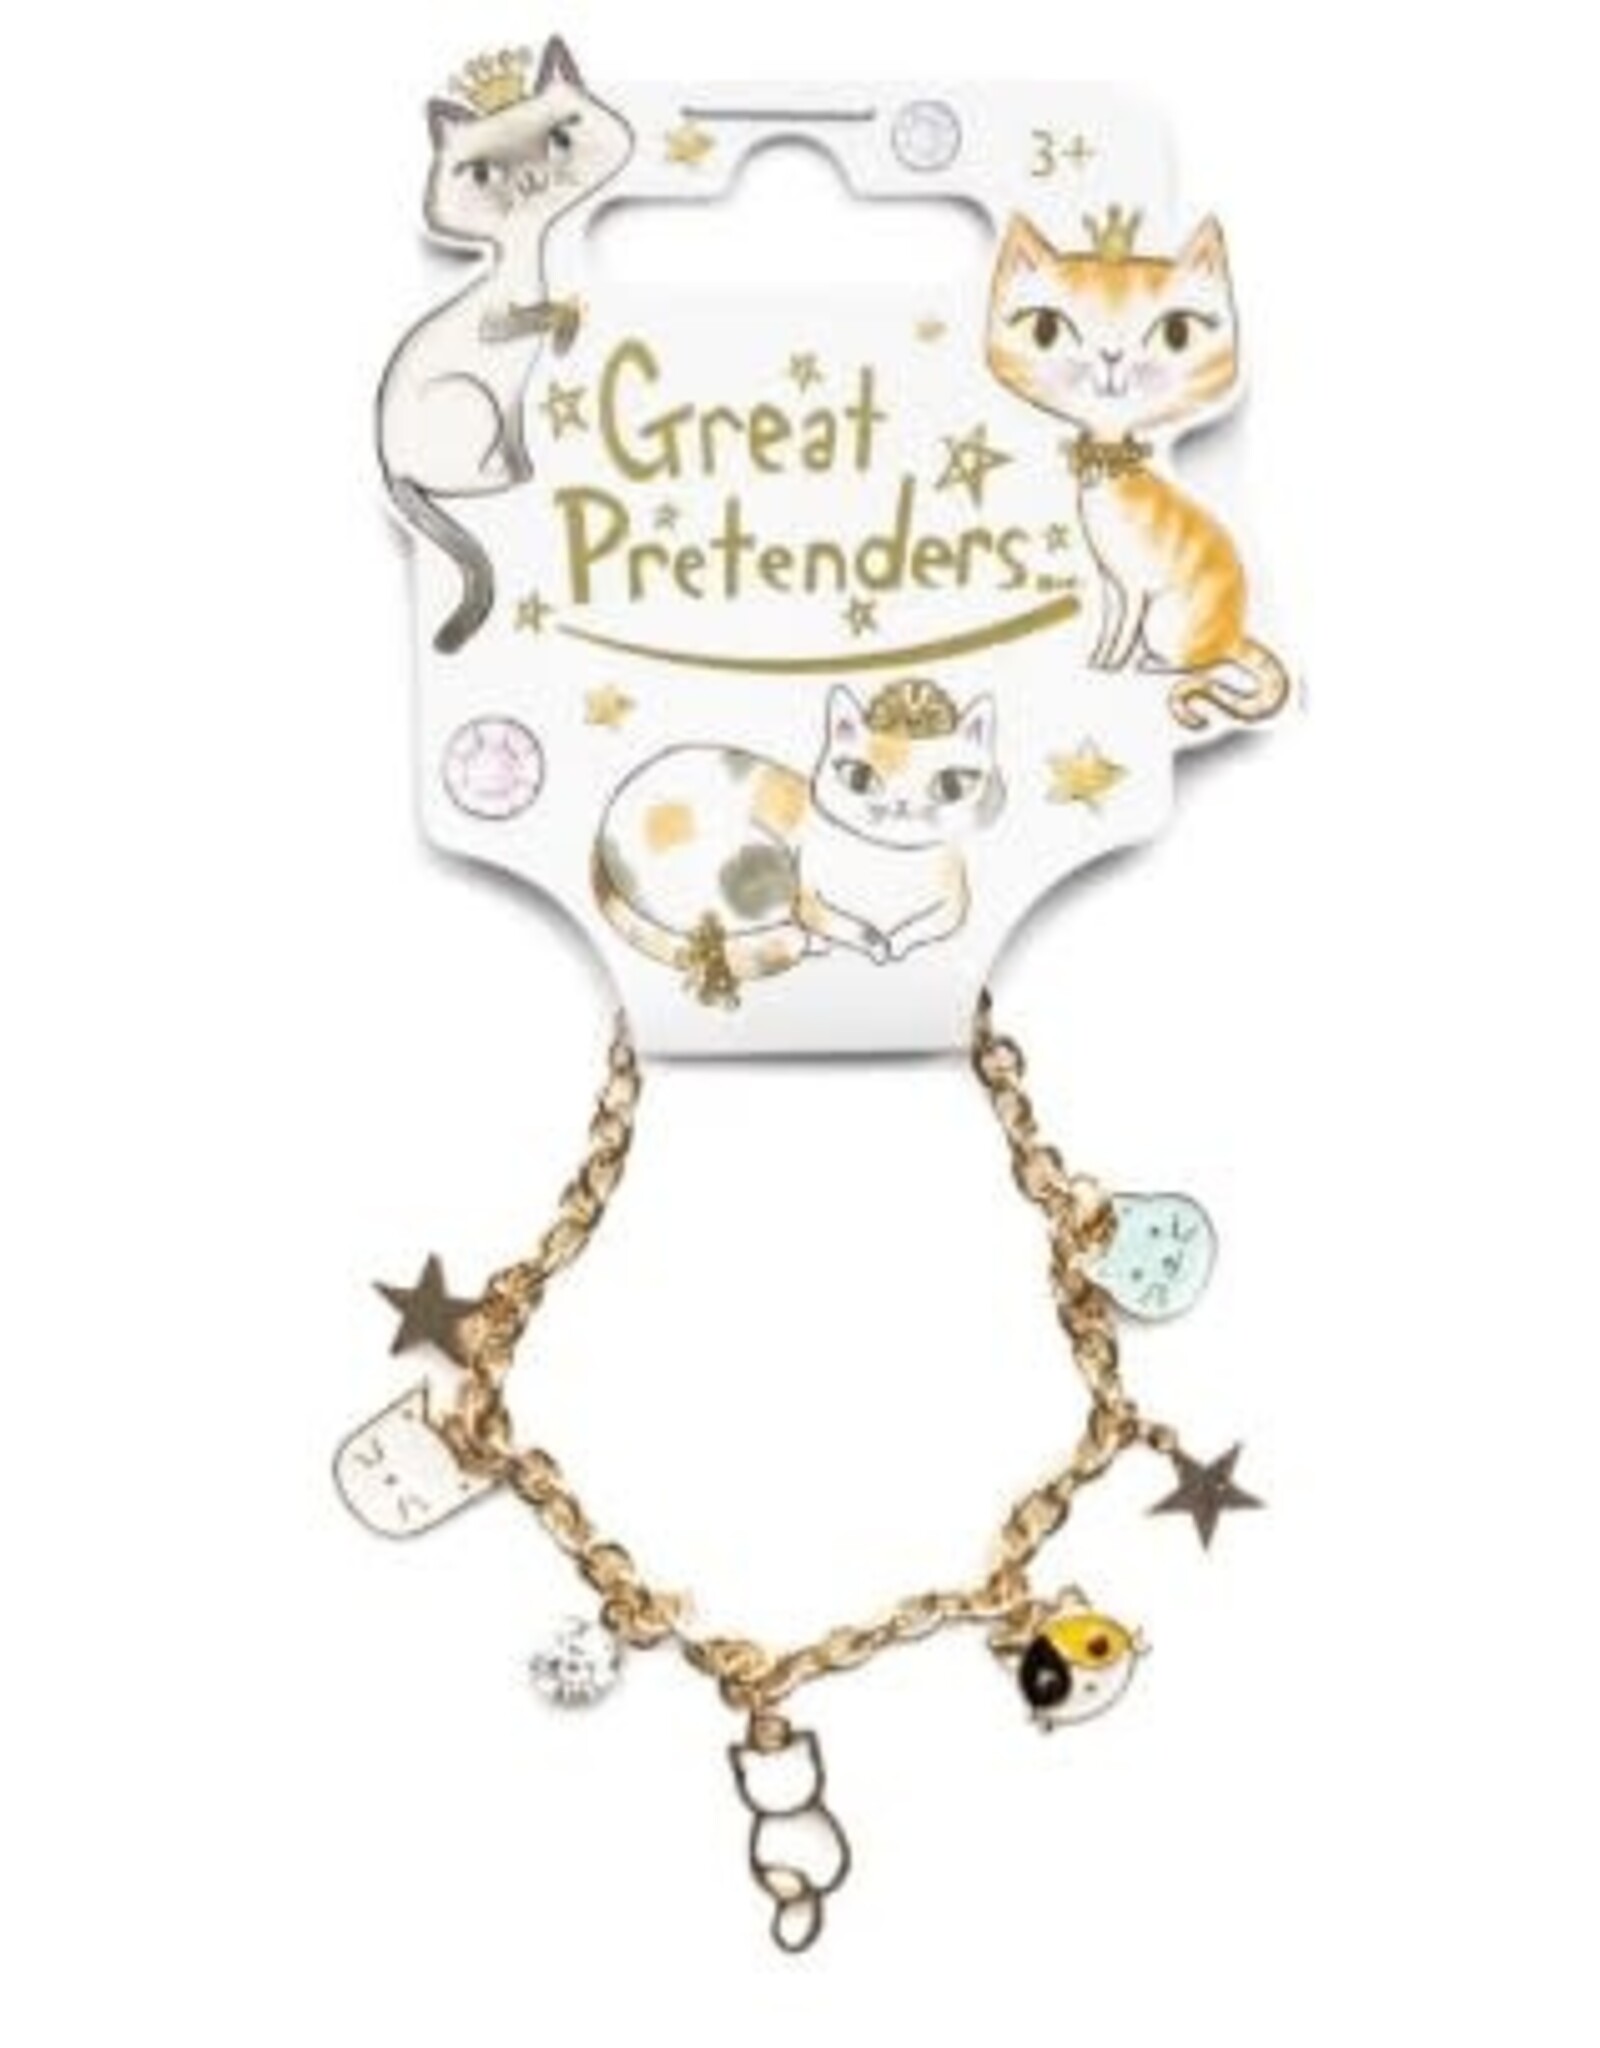 Great Pretenders Purr-fectly Charming Bracelet